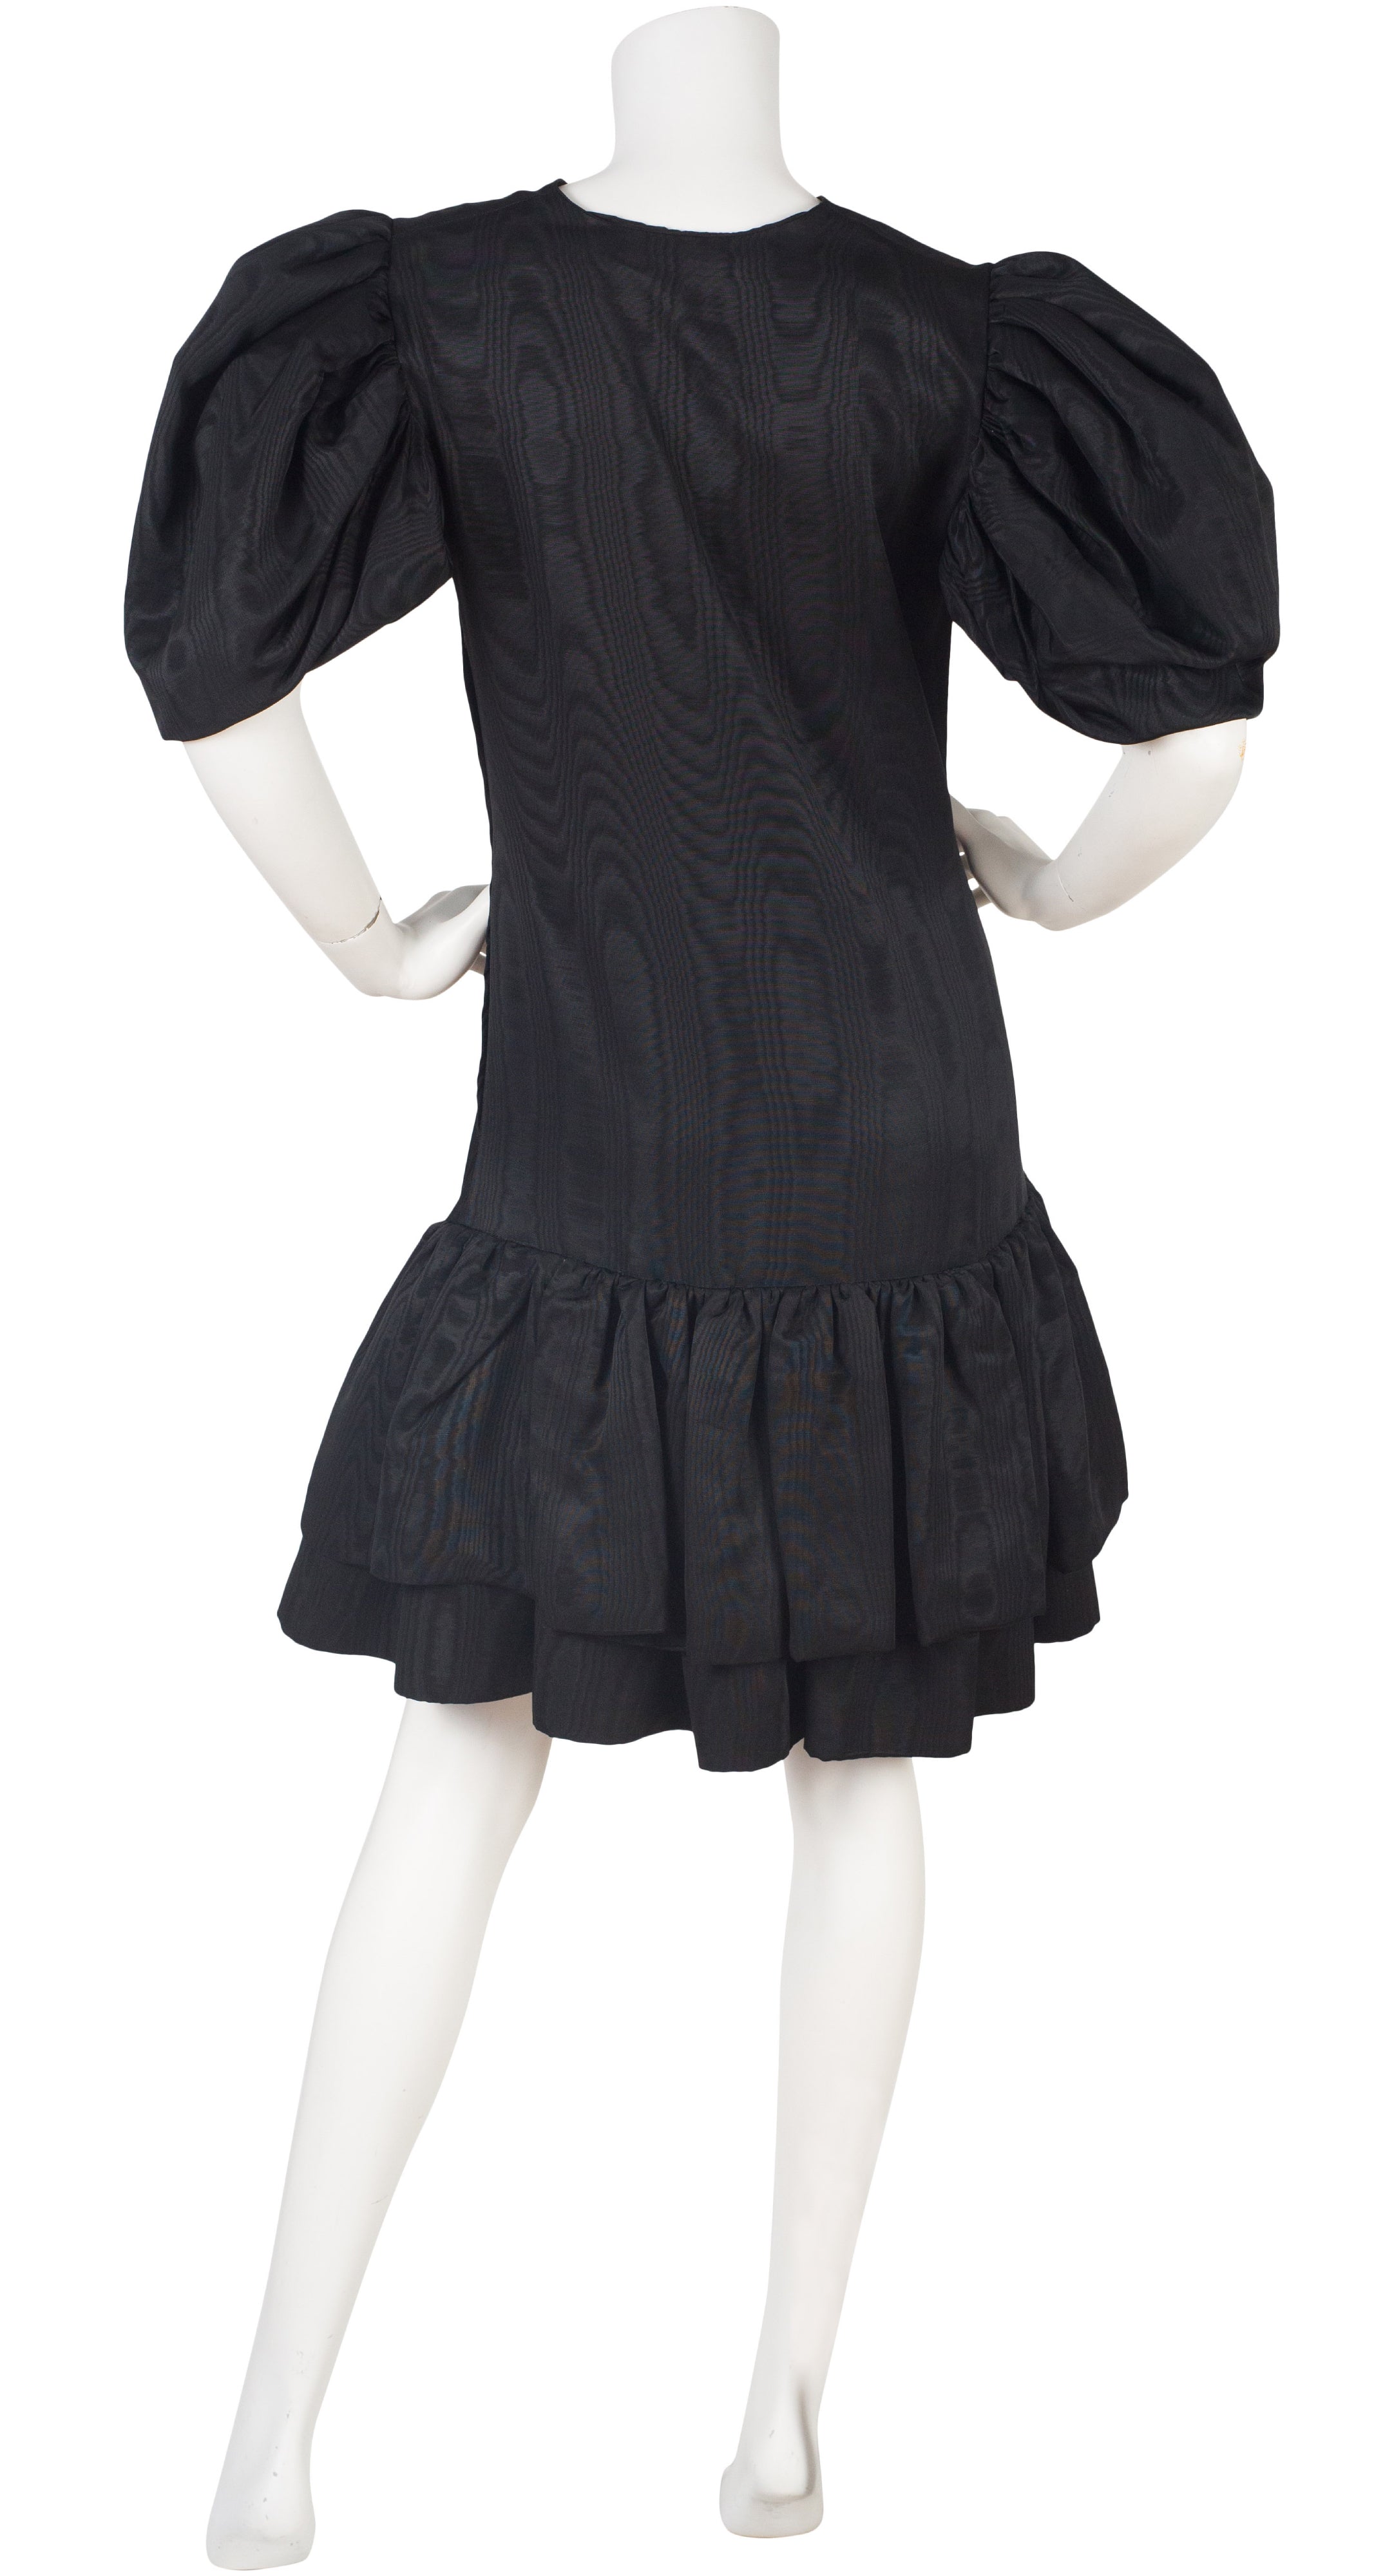 1980s Black Moire Taffeta Party Dress